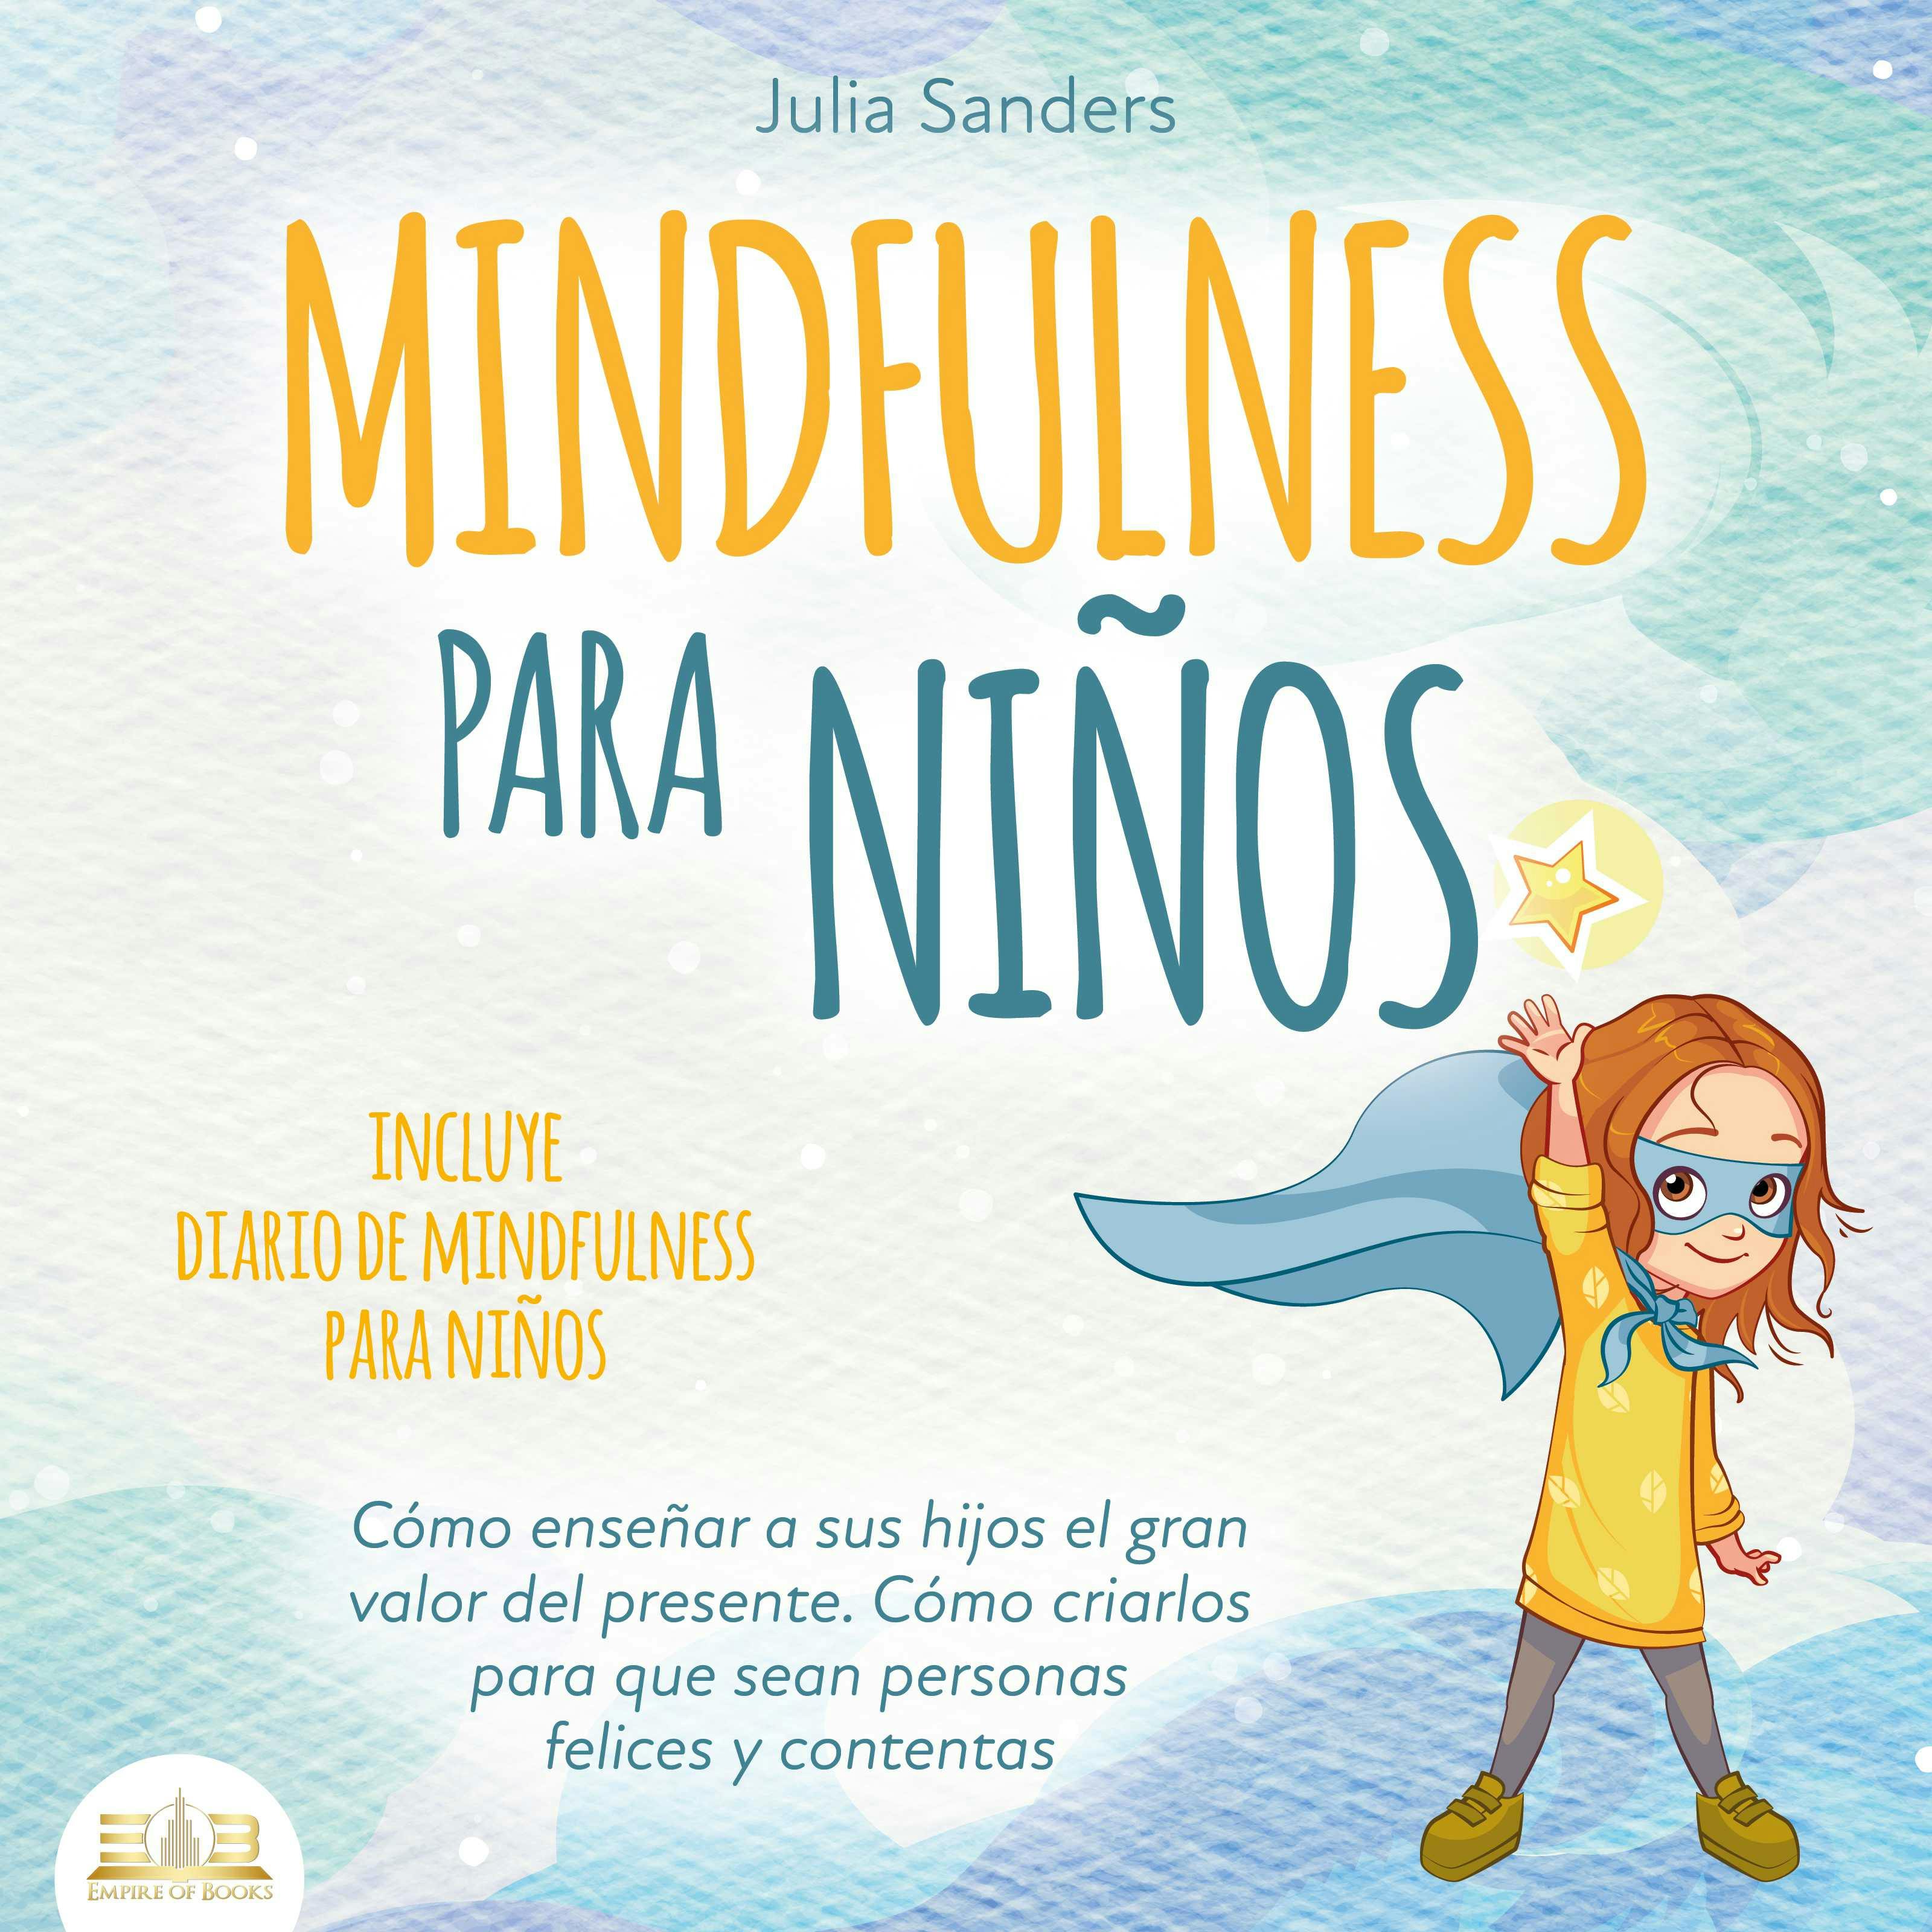 Diario de consciencia para niños: Diario de Mindfulness para un